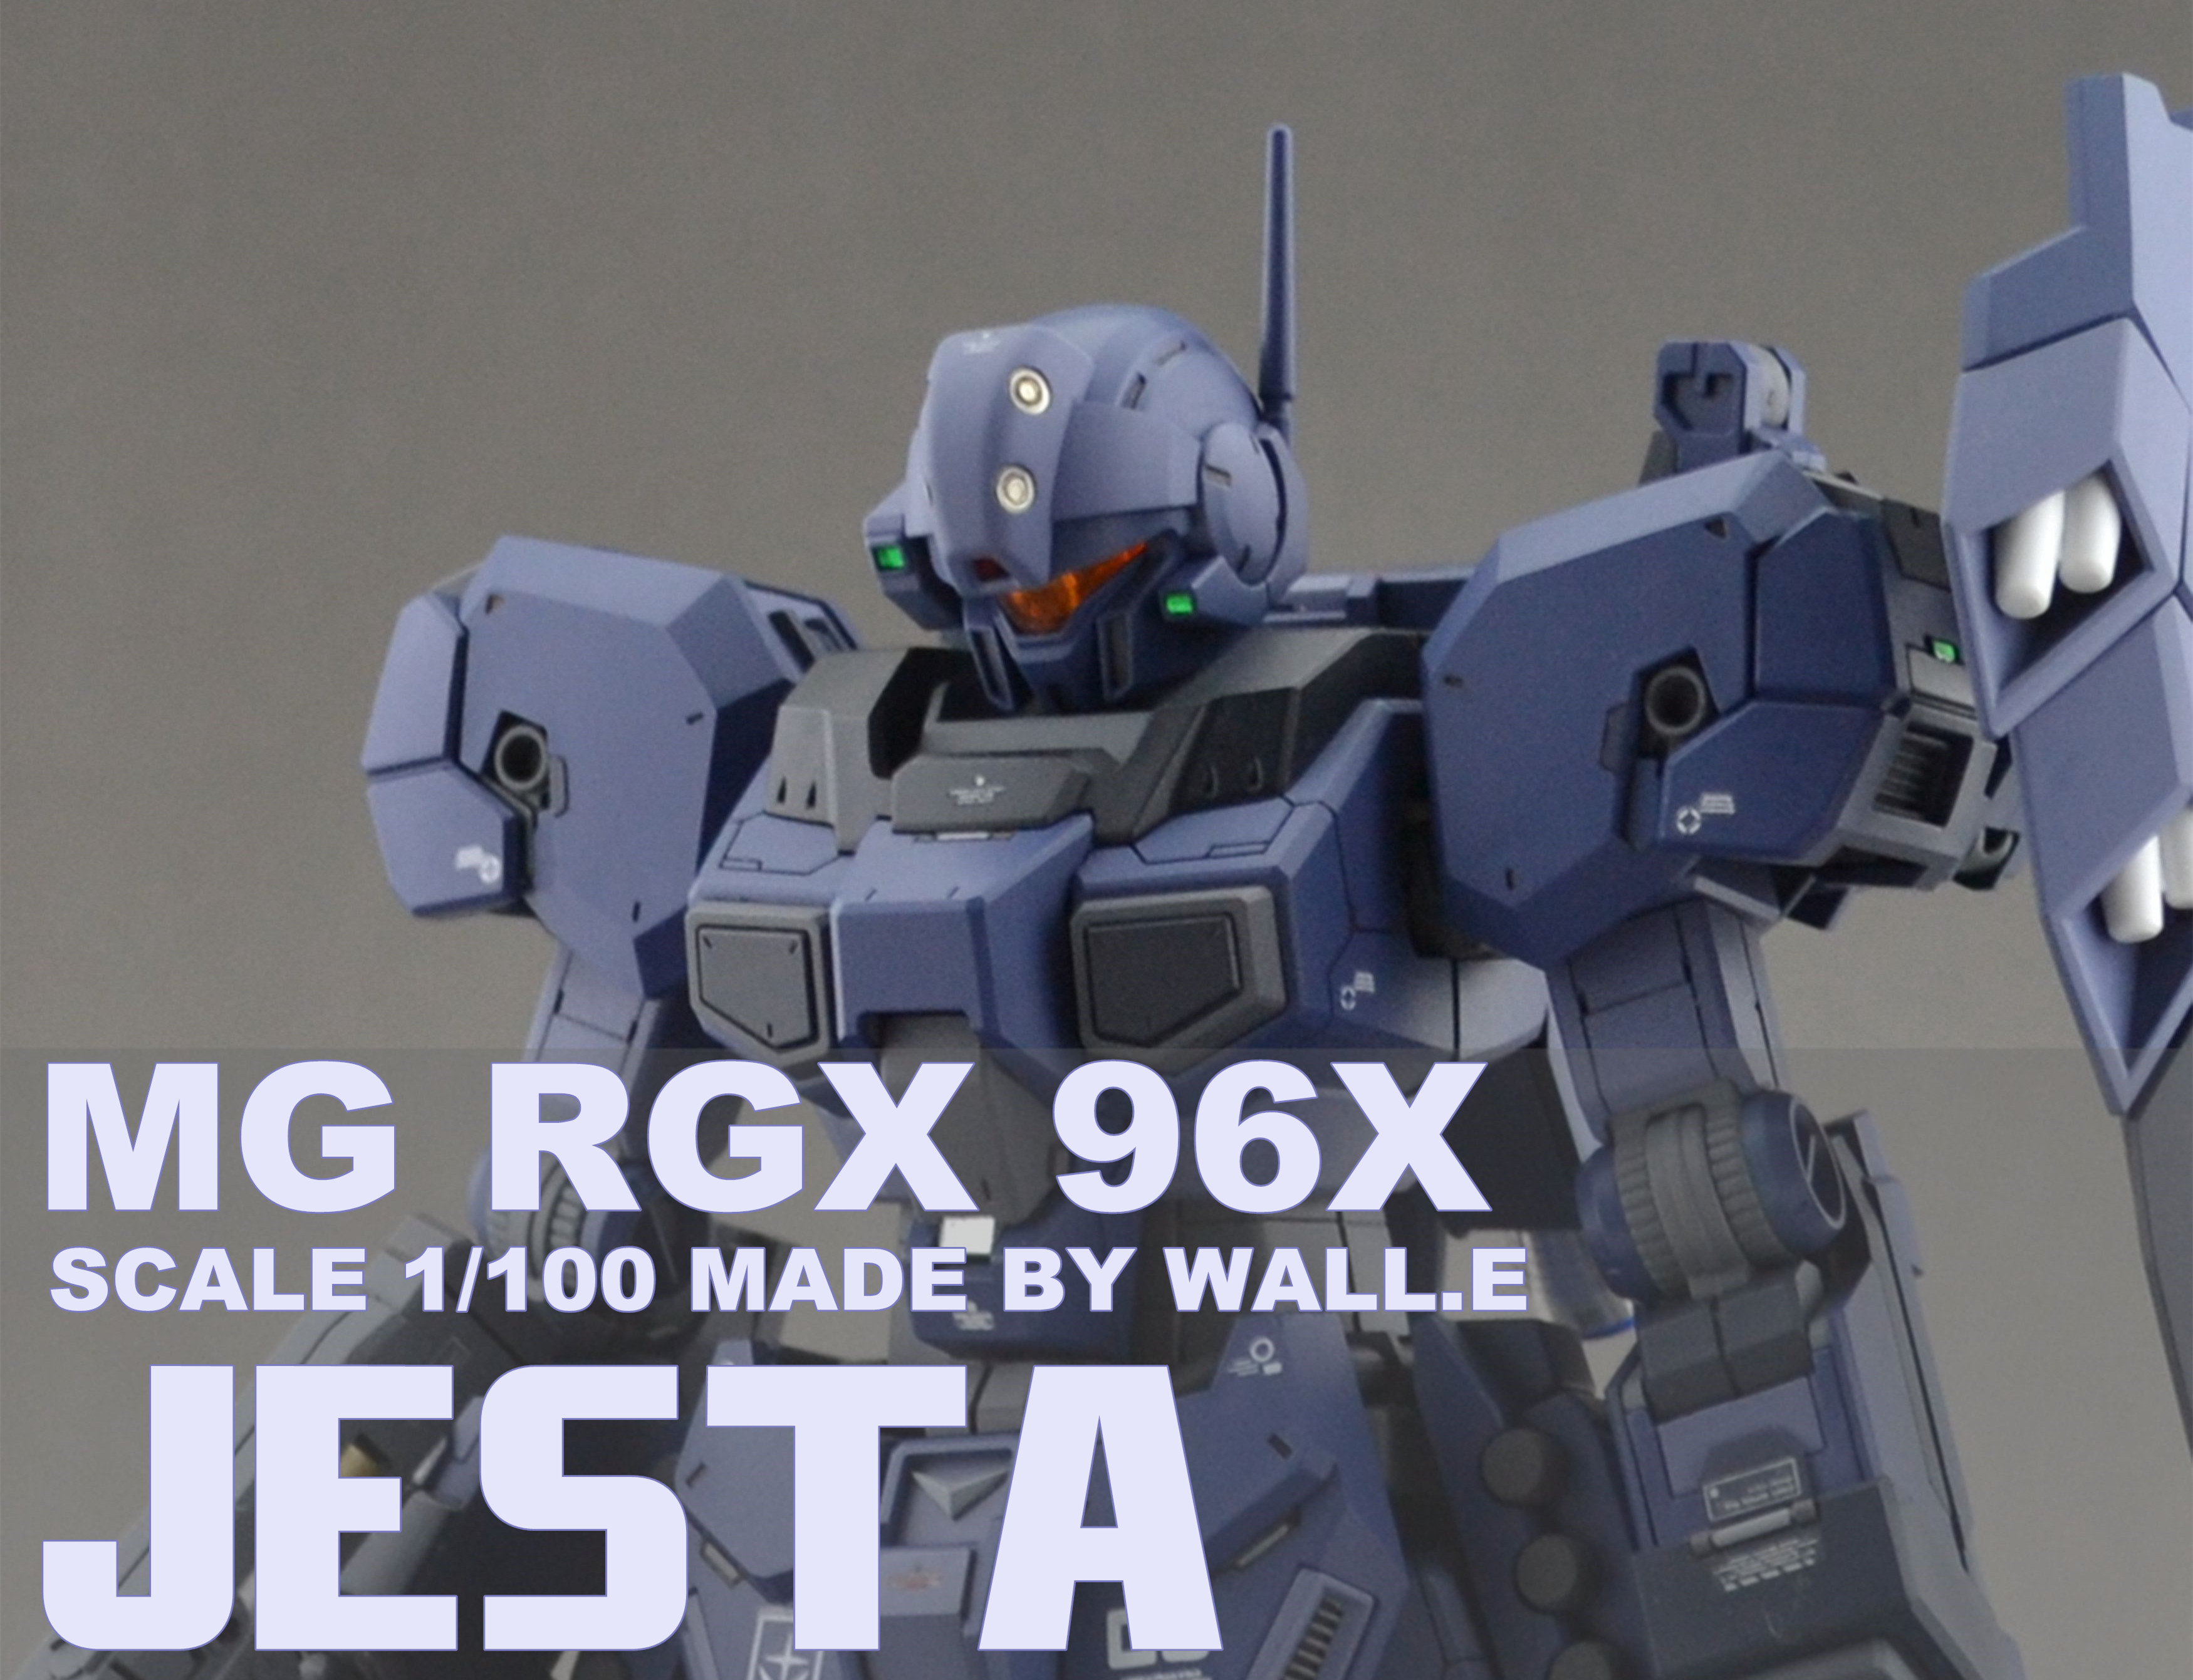 SIDE3 MG 1/100 RGM-96X ジェスタ レジンキット - INASK INFO (^^ゞ